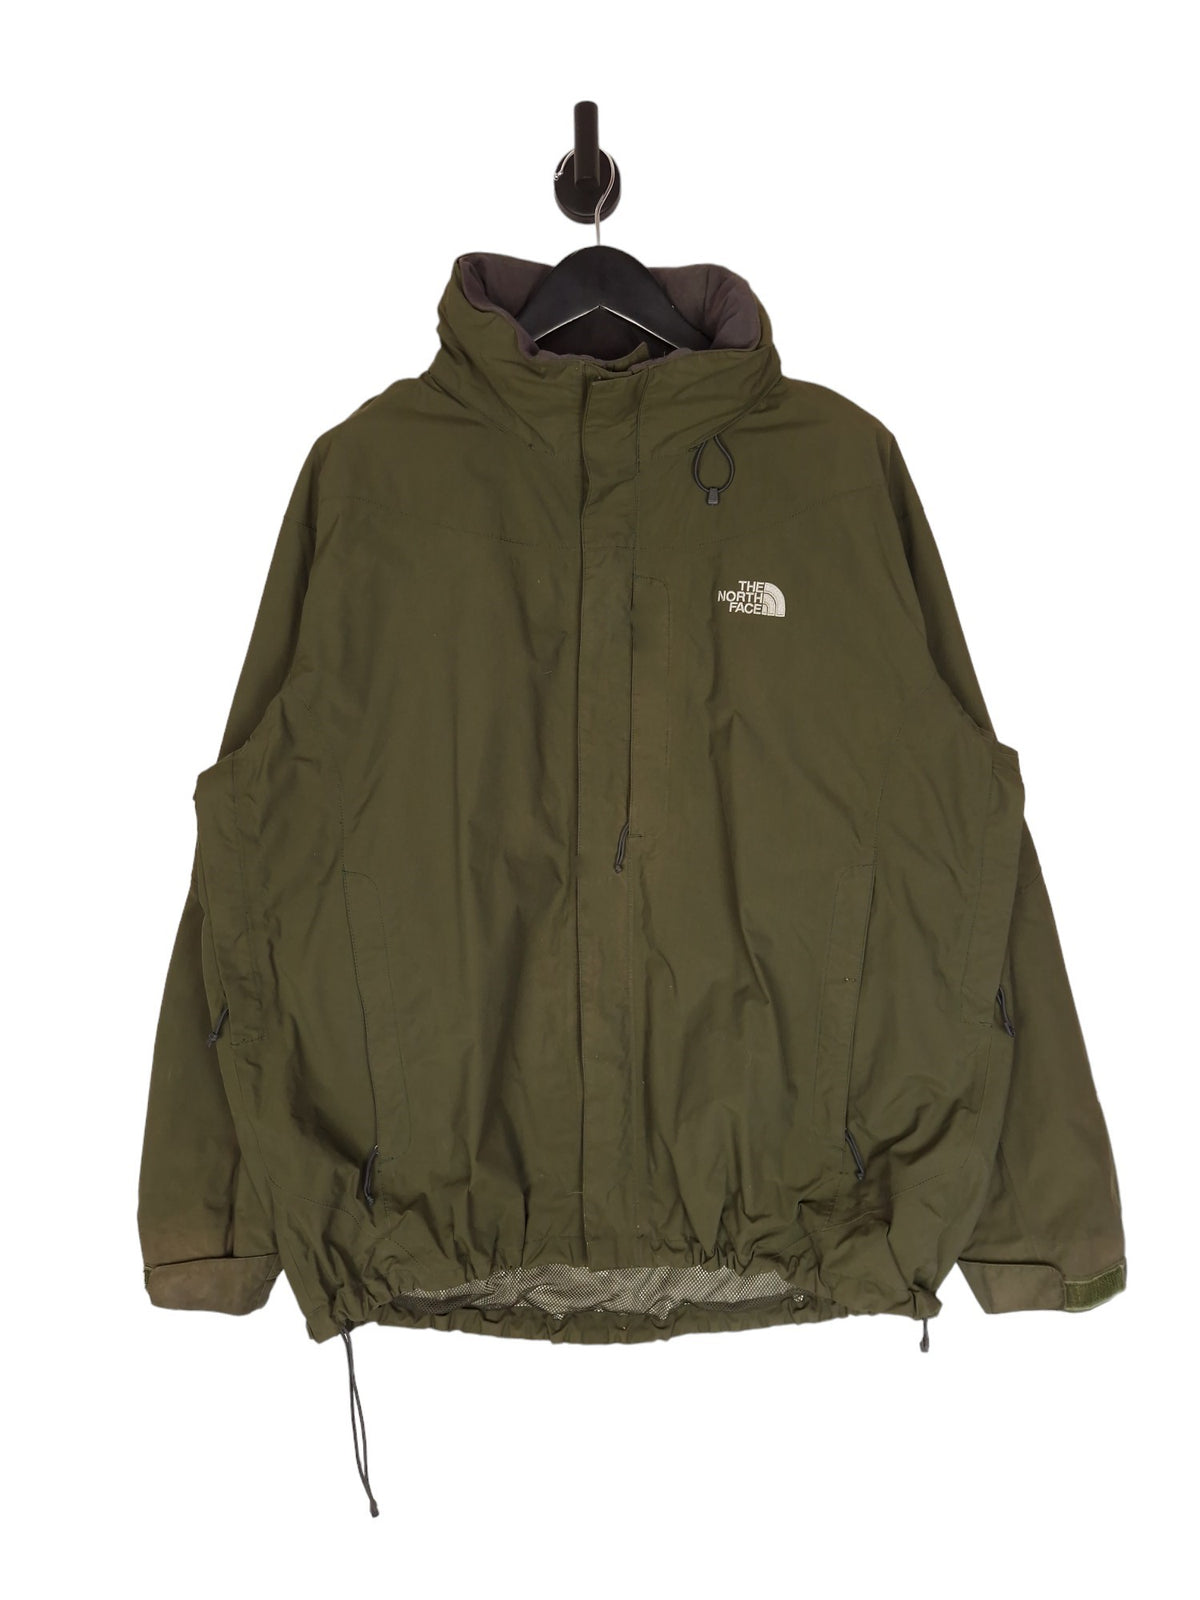 The North Face Hyvent Rain Jacket - Size  XL